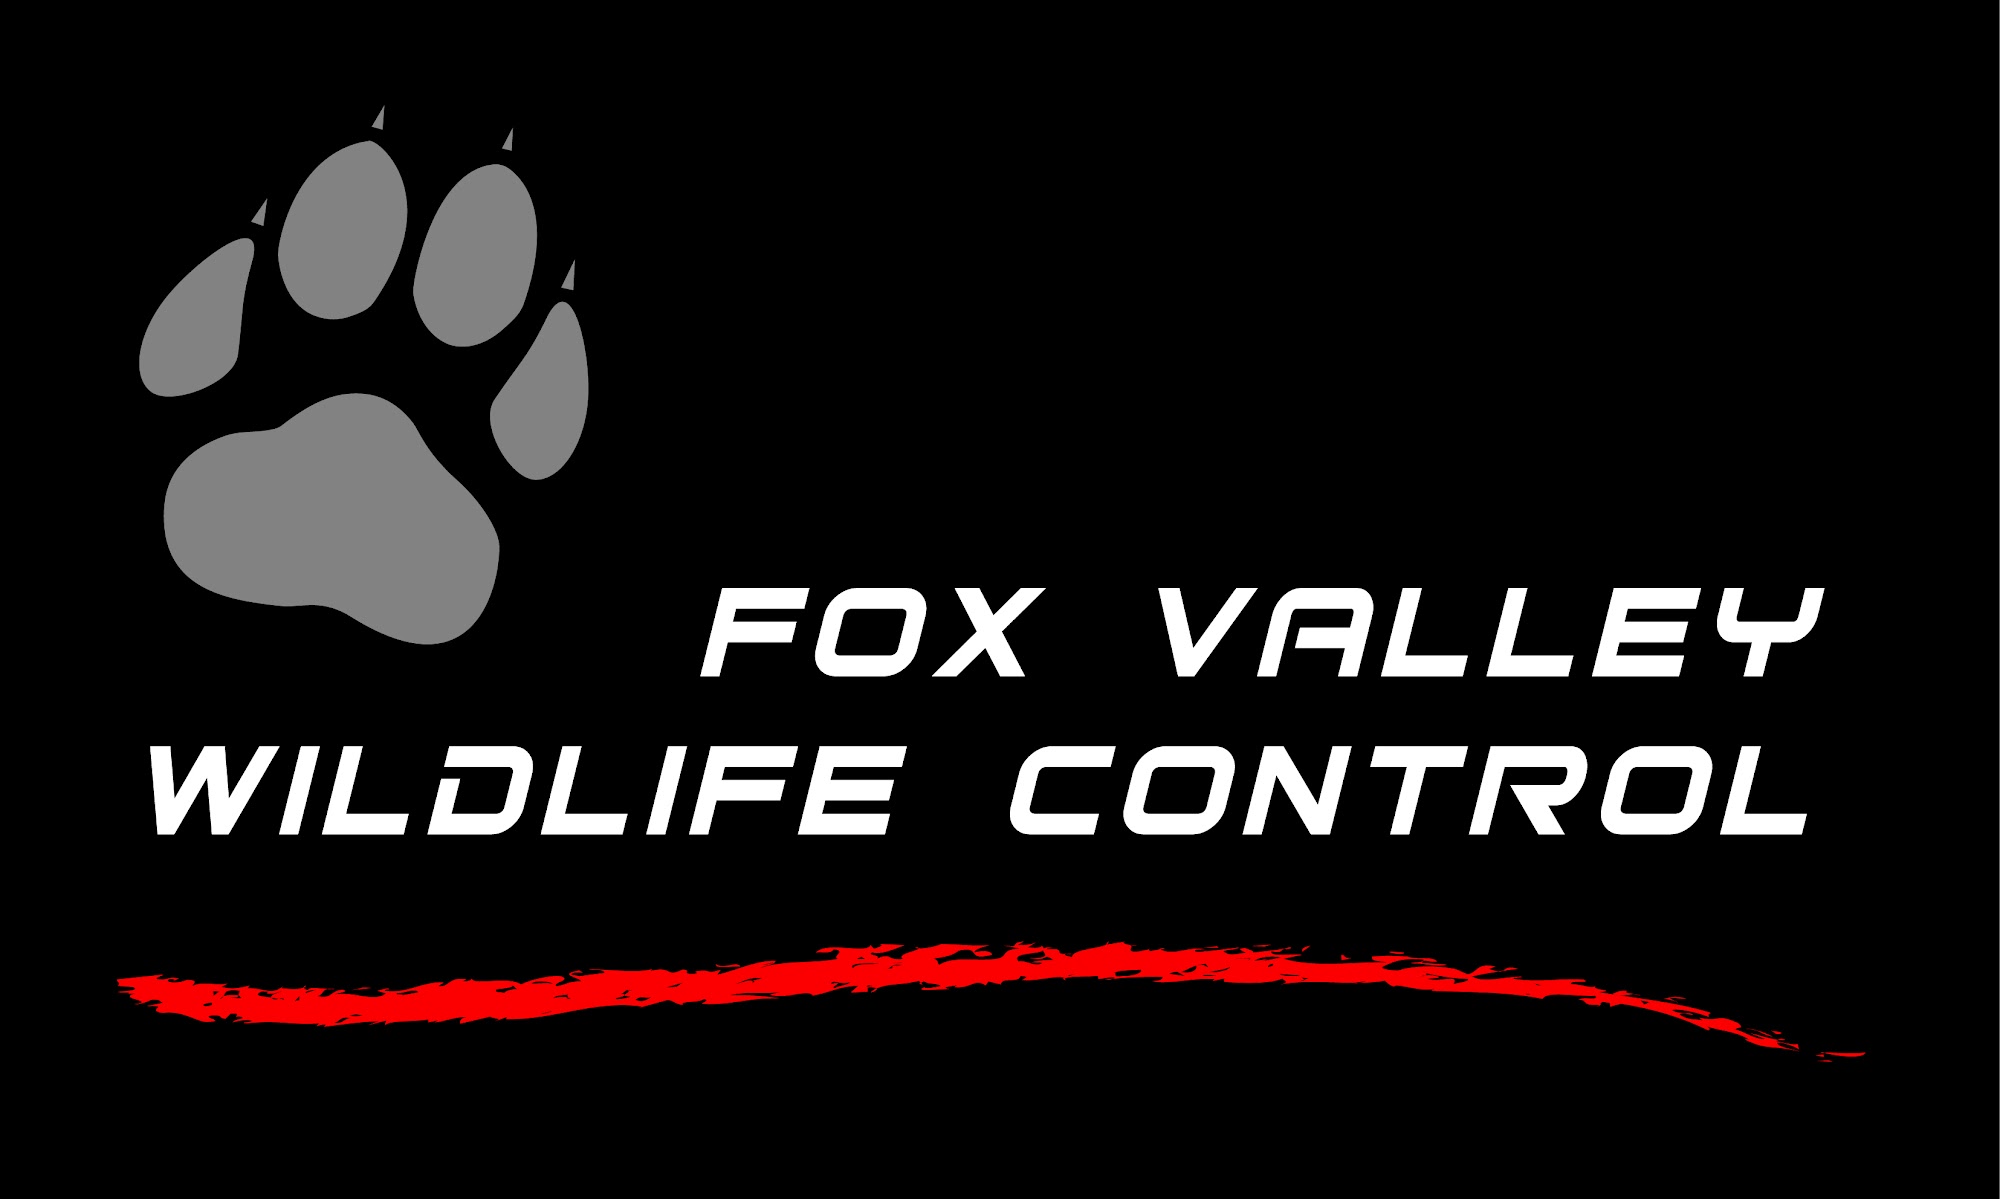 Fox Valley Wildlife Control